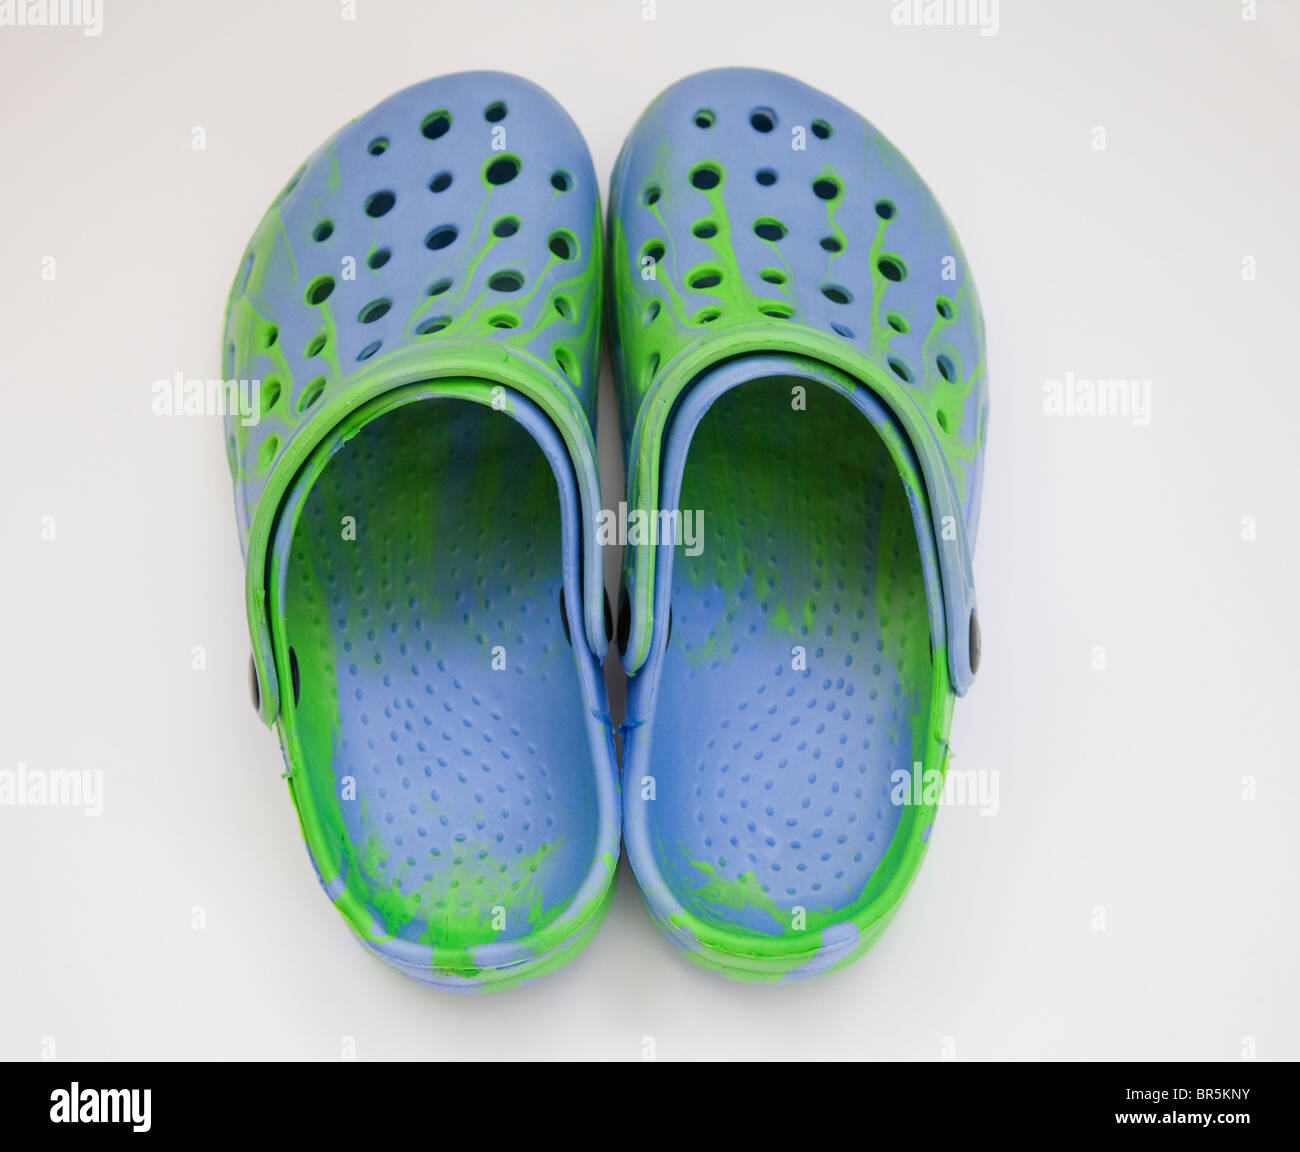 blue green crocs